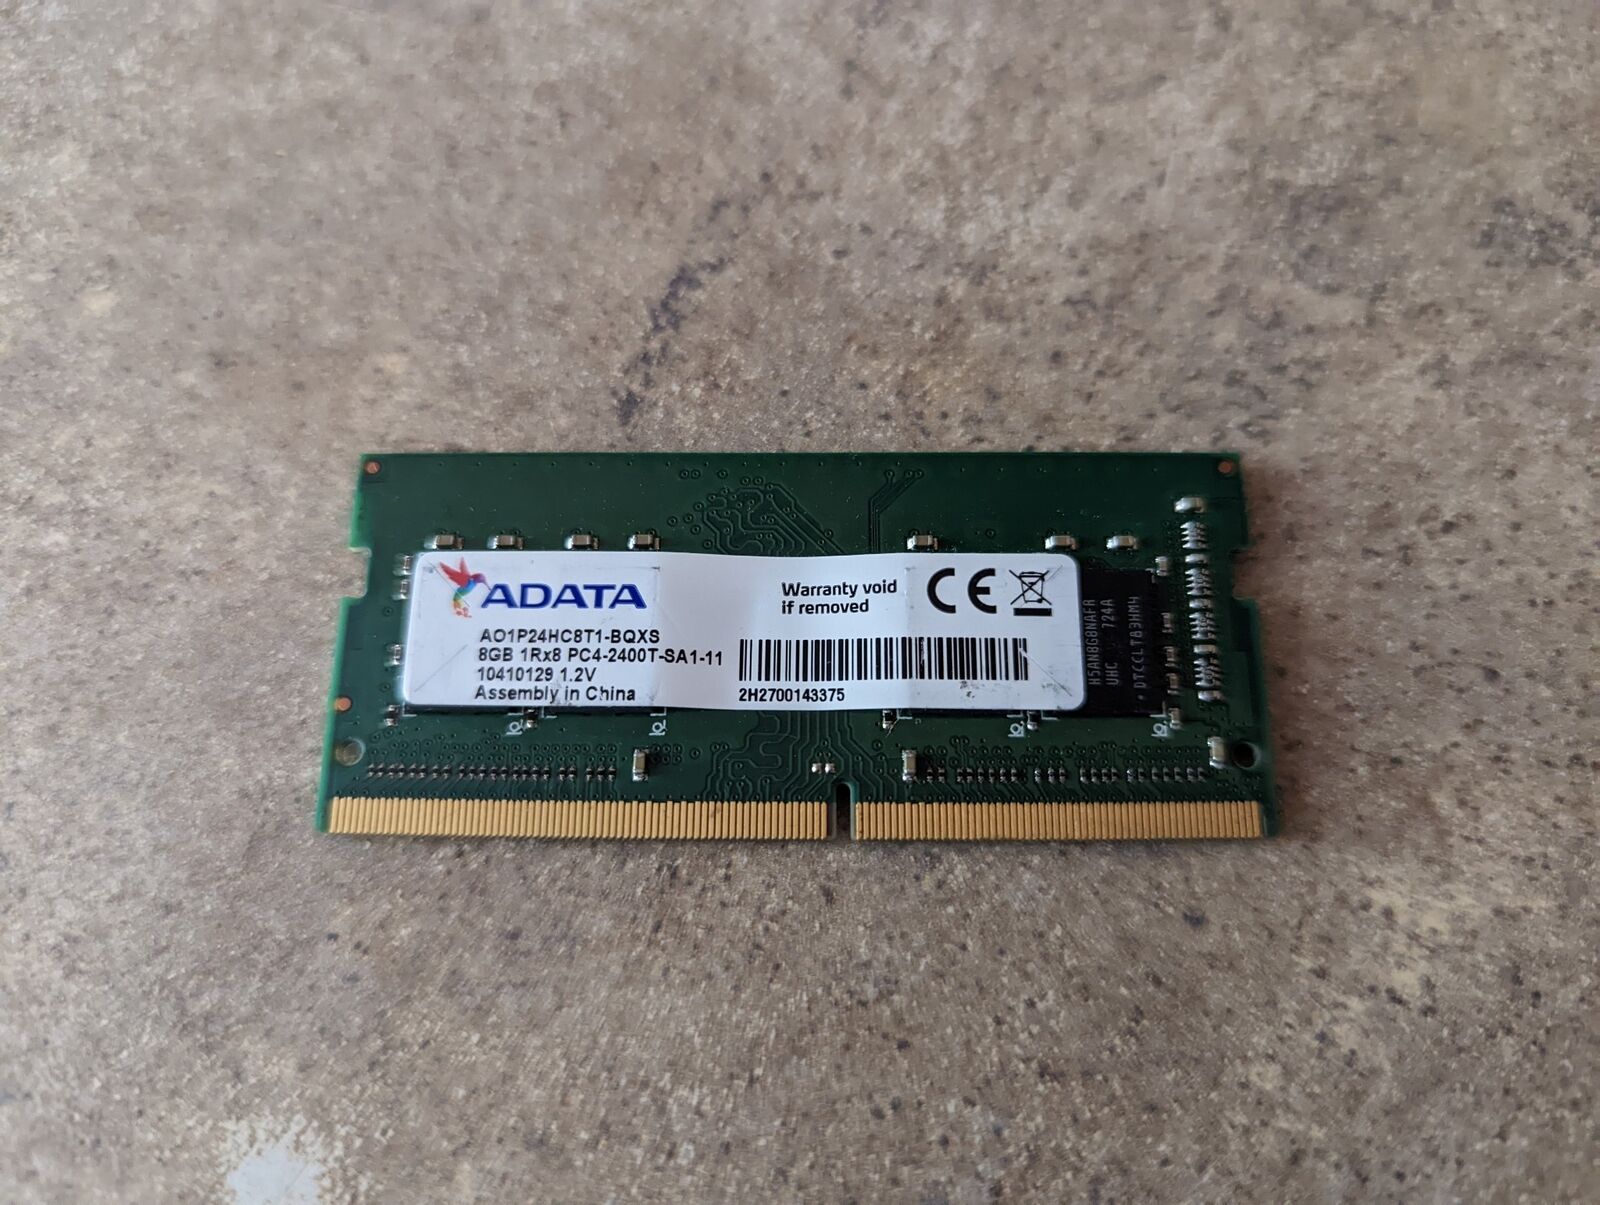 ADATA 8GB PC4-2400T 1RX8 DDR4-19200 SODIMM MEMORY RAM AO1P24HC8T1-BQXS V3-1(2)